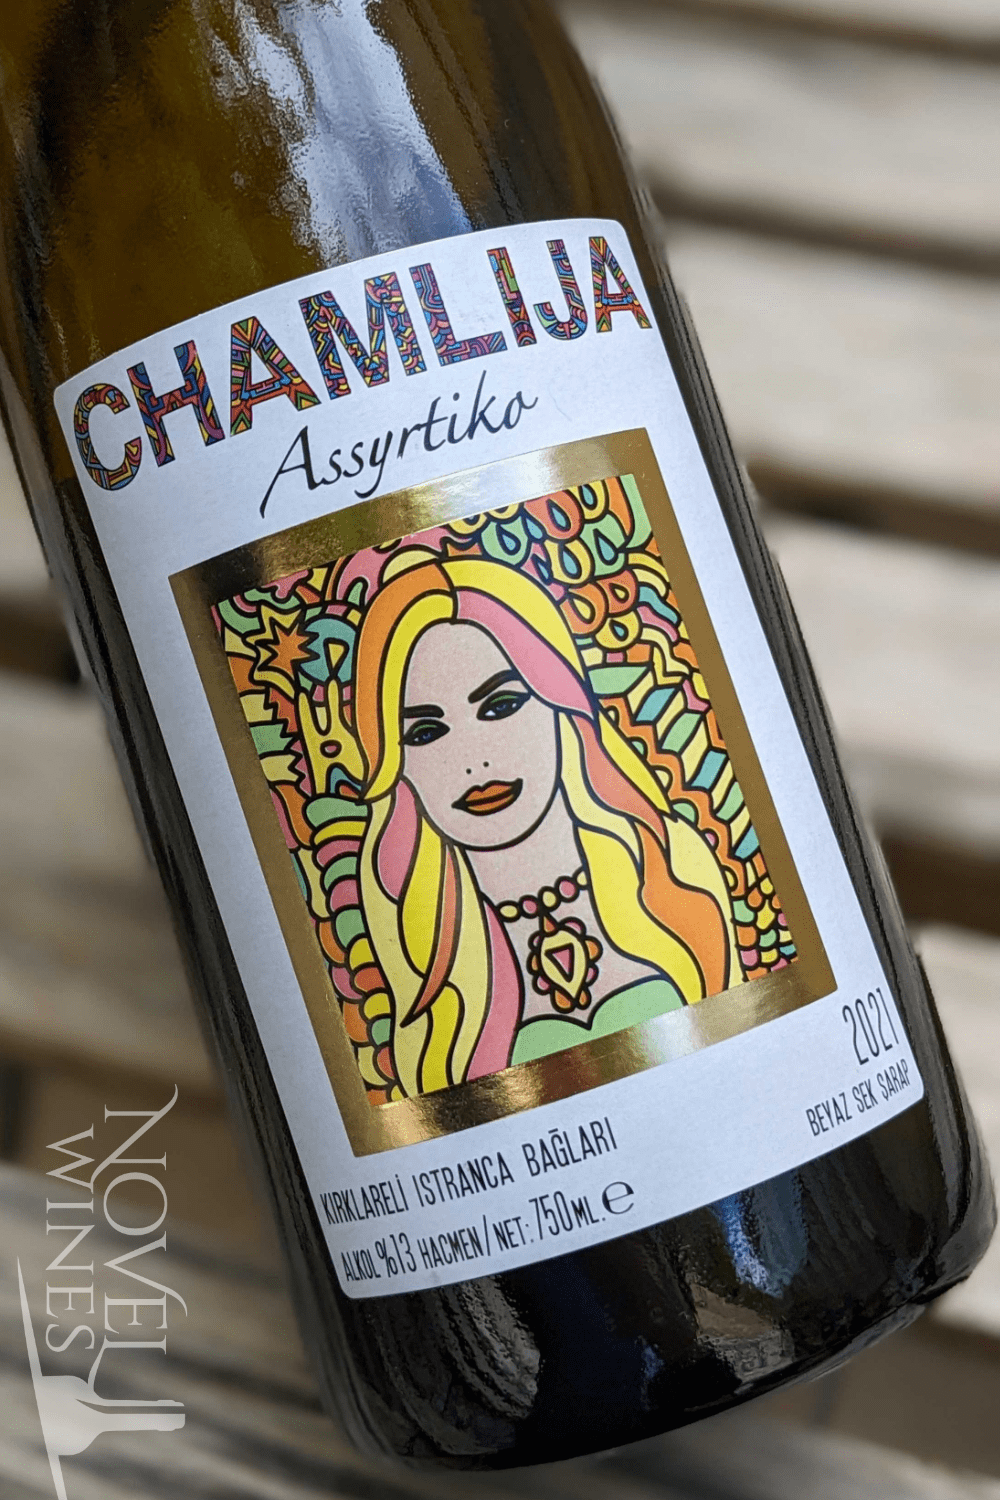 Chamlija White Wine Chamlija Assyrtiko 2021, Turkey